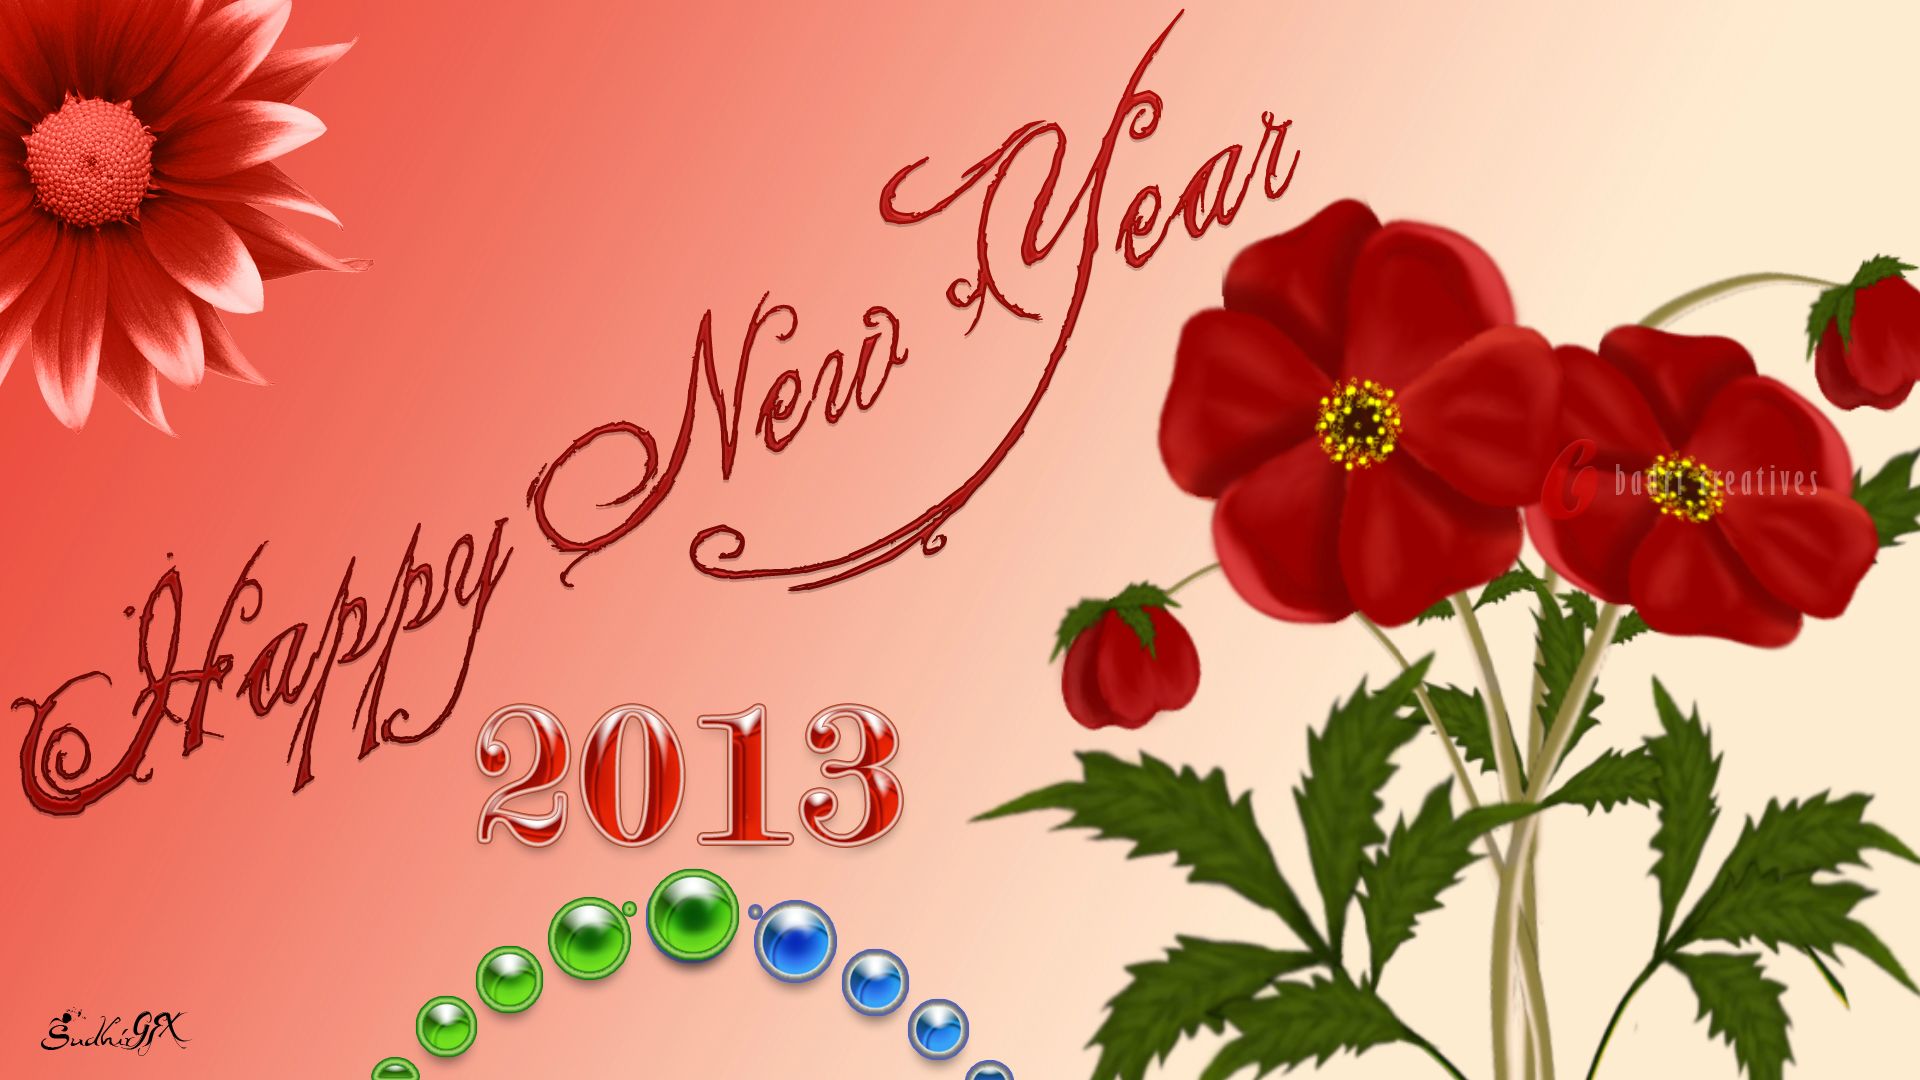 Happy New Year Wishes 2013 In Telugu